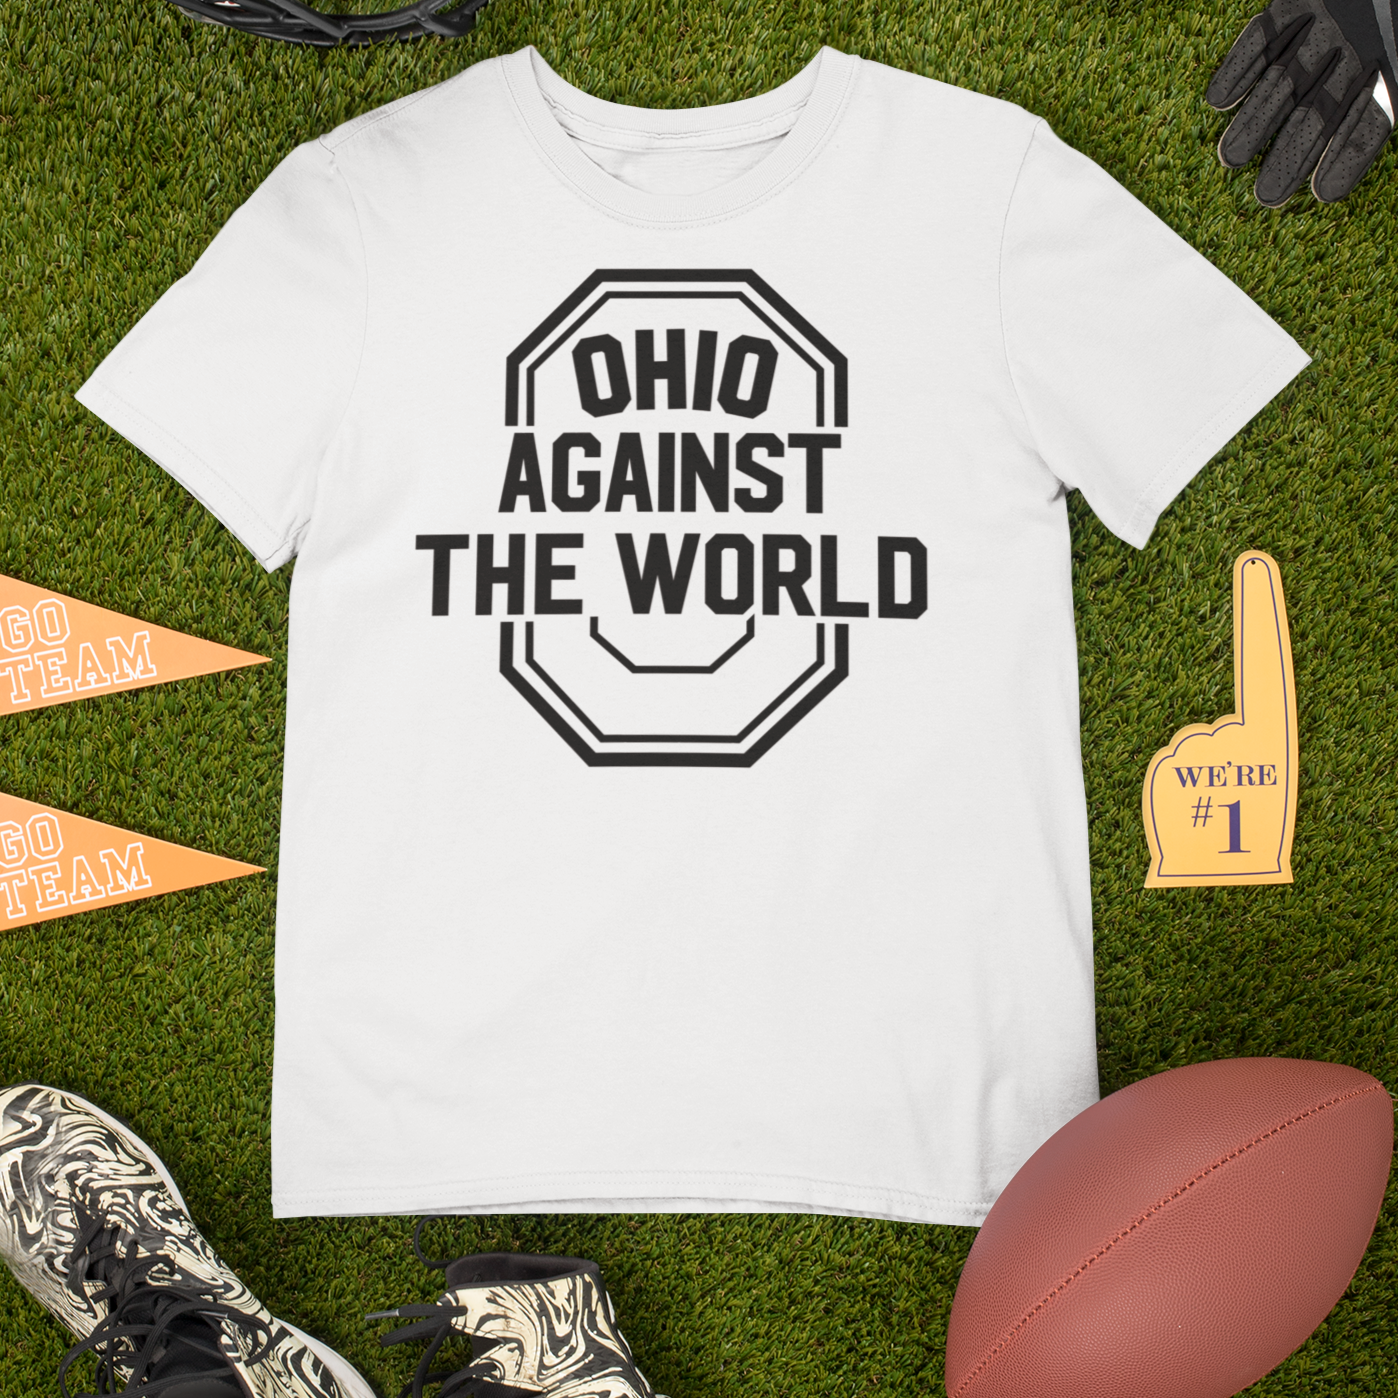 Ohio against the world shirt, football shirts designs, Football spirit shirts - Wilson Design Group